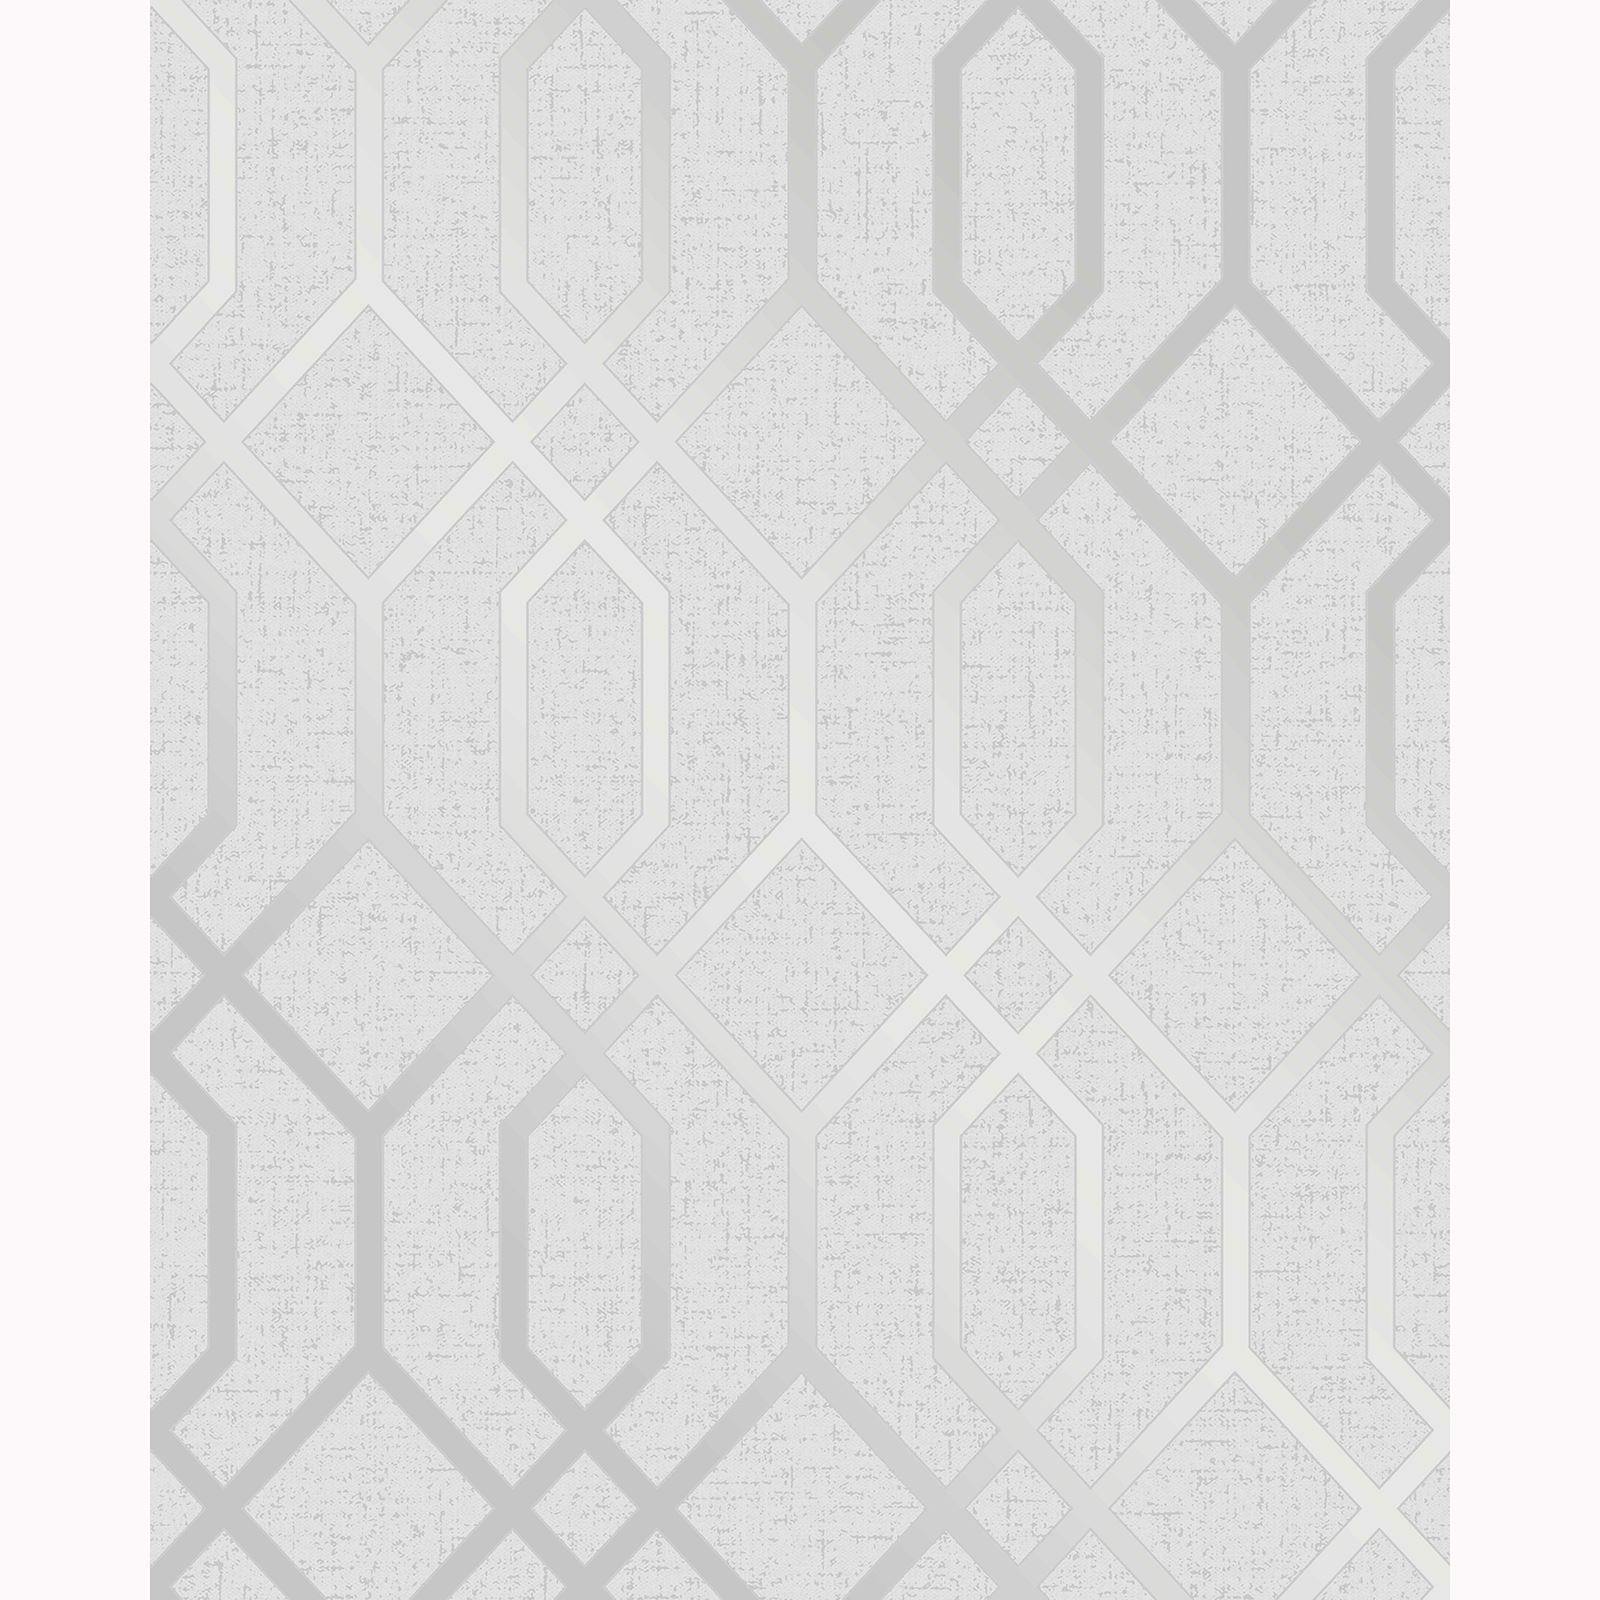 WM4230401 Silver Gray White Glitter Textured Geometric Trellis